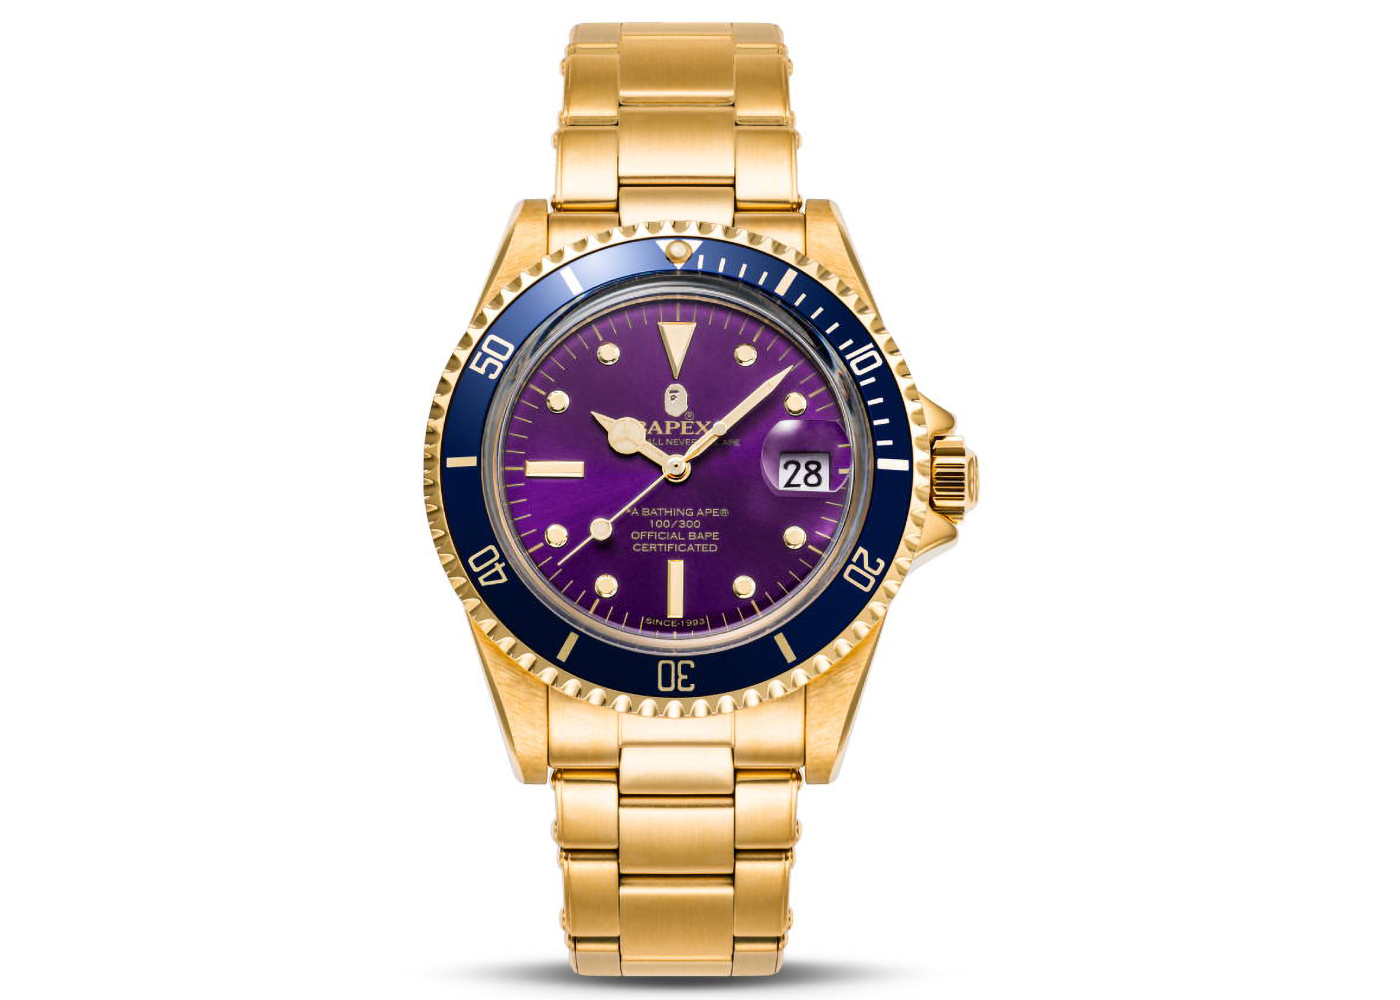 BAPE A Bathing Ape Type 1 Bapex Watch Gold Purple